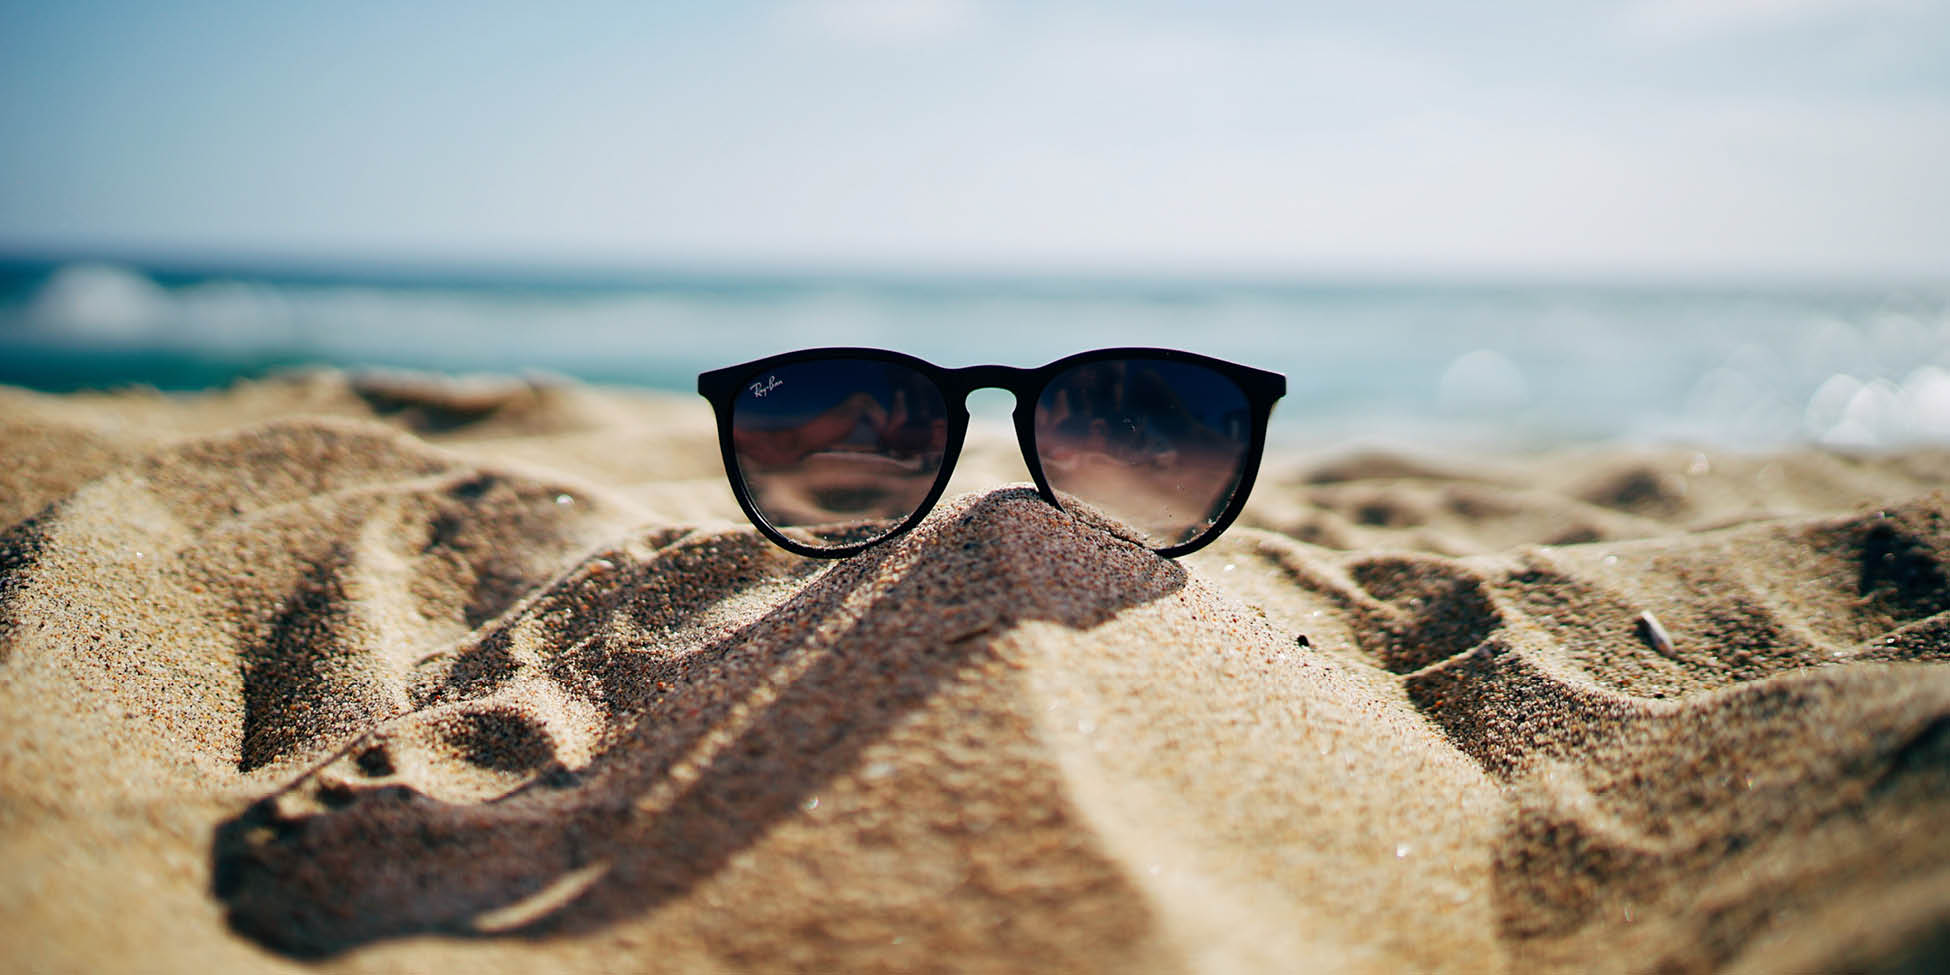 sunglasses resting on sand at beach